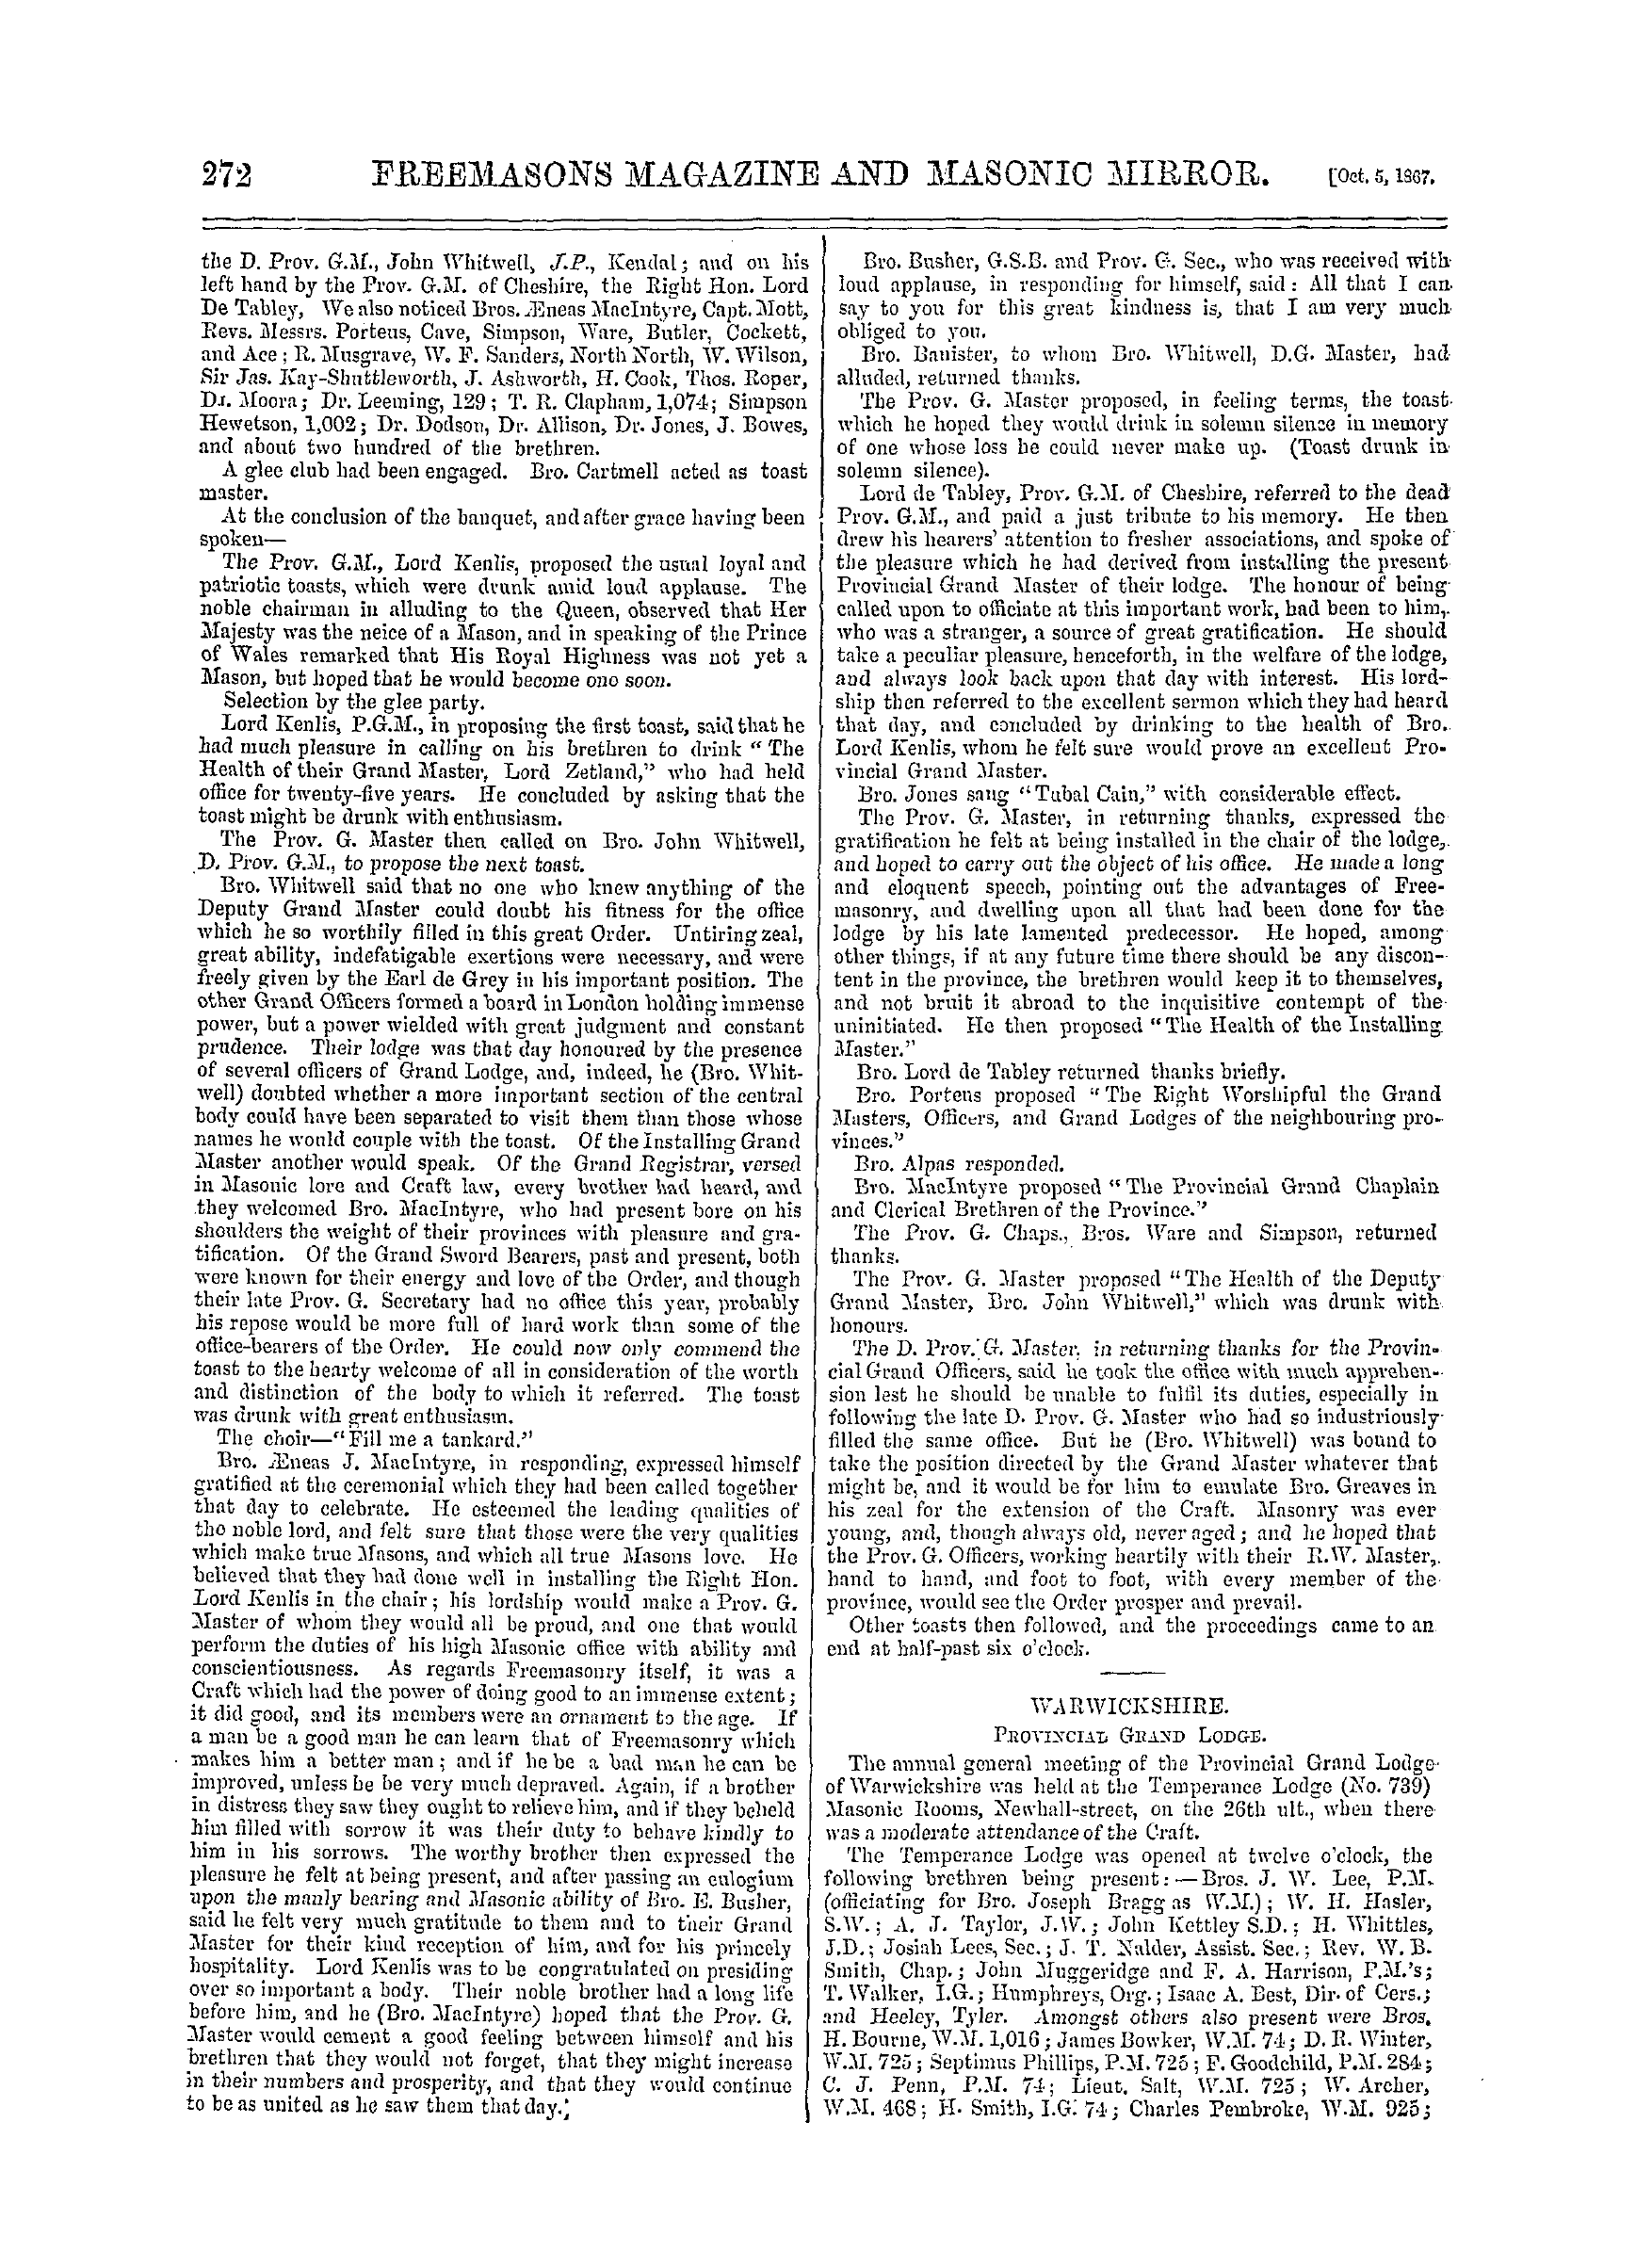 The Freemasons' Monthly Magazine: 1867-10-05 - Provincial.